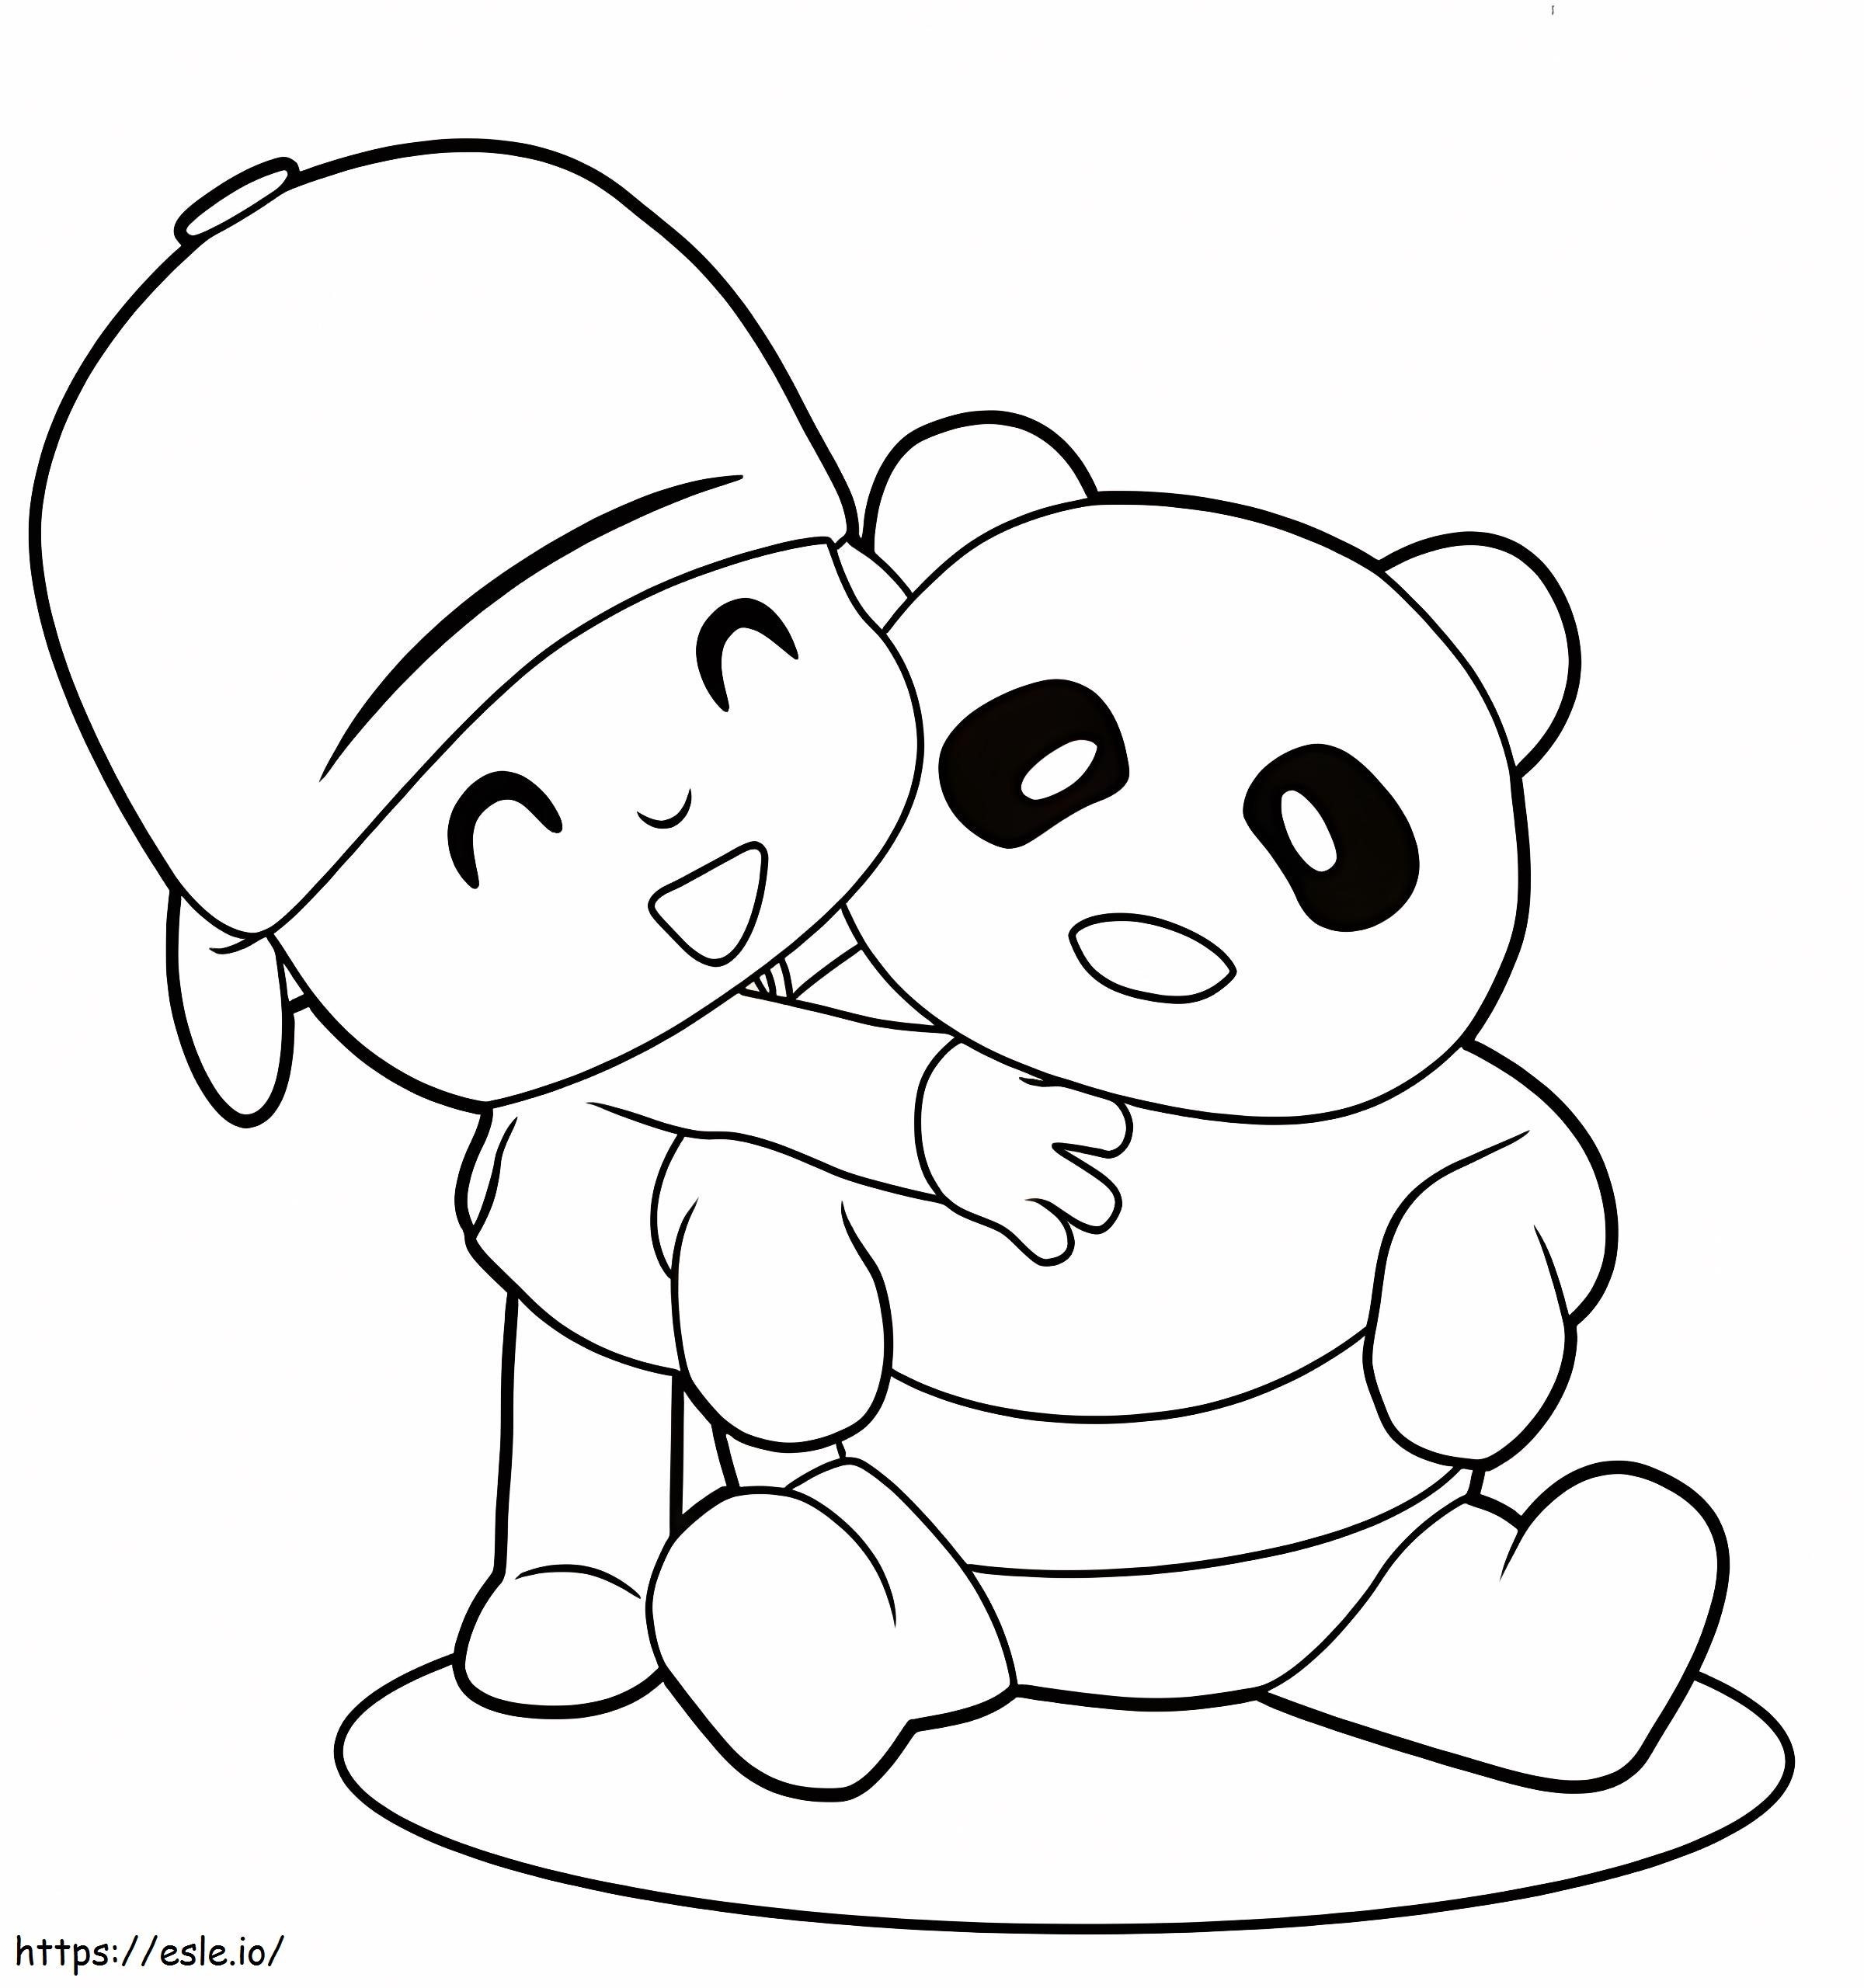 Coloriage Pocoyo embrasse Panda à imprimer dessin